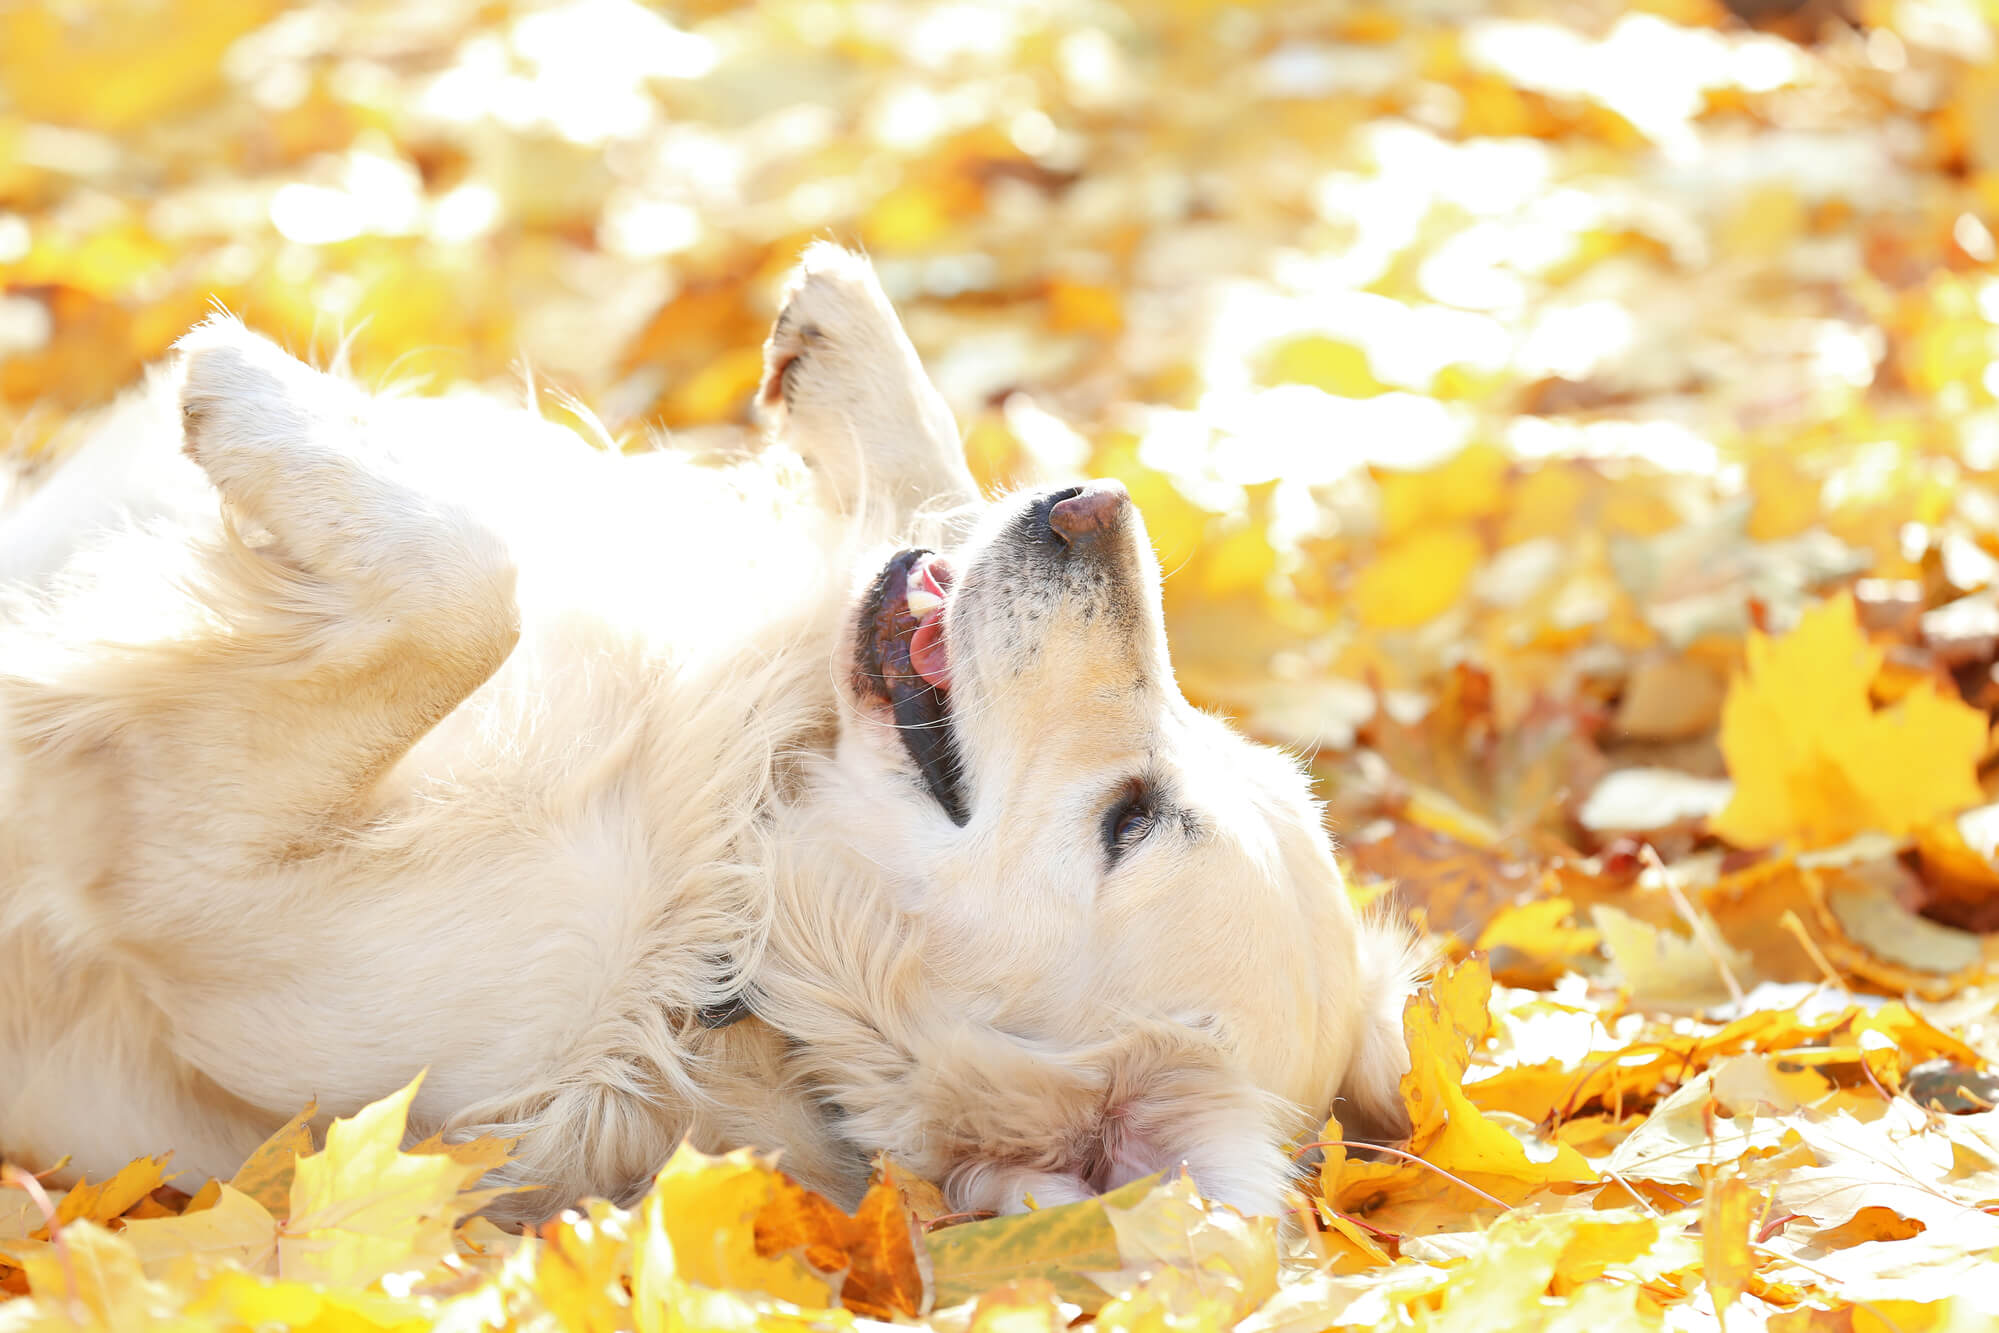 Dog in leaf pile